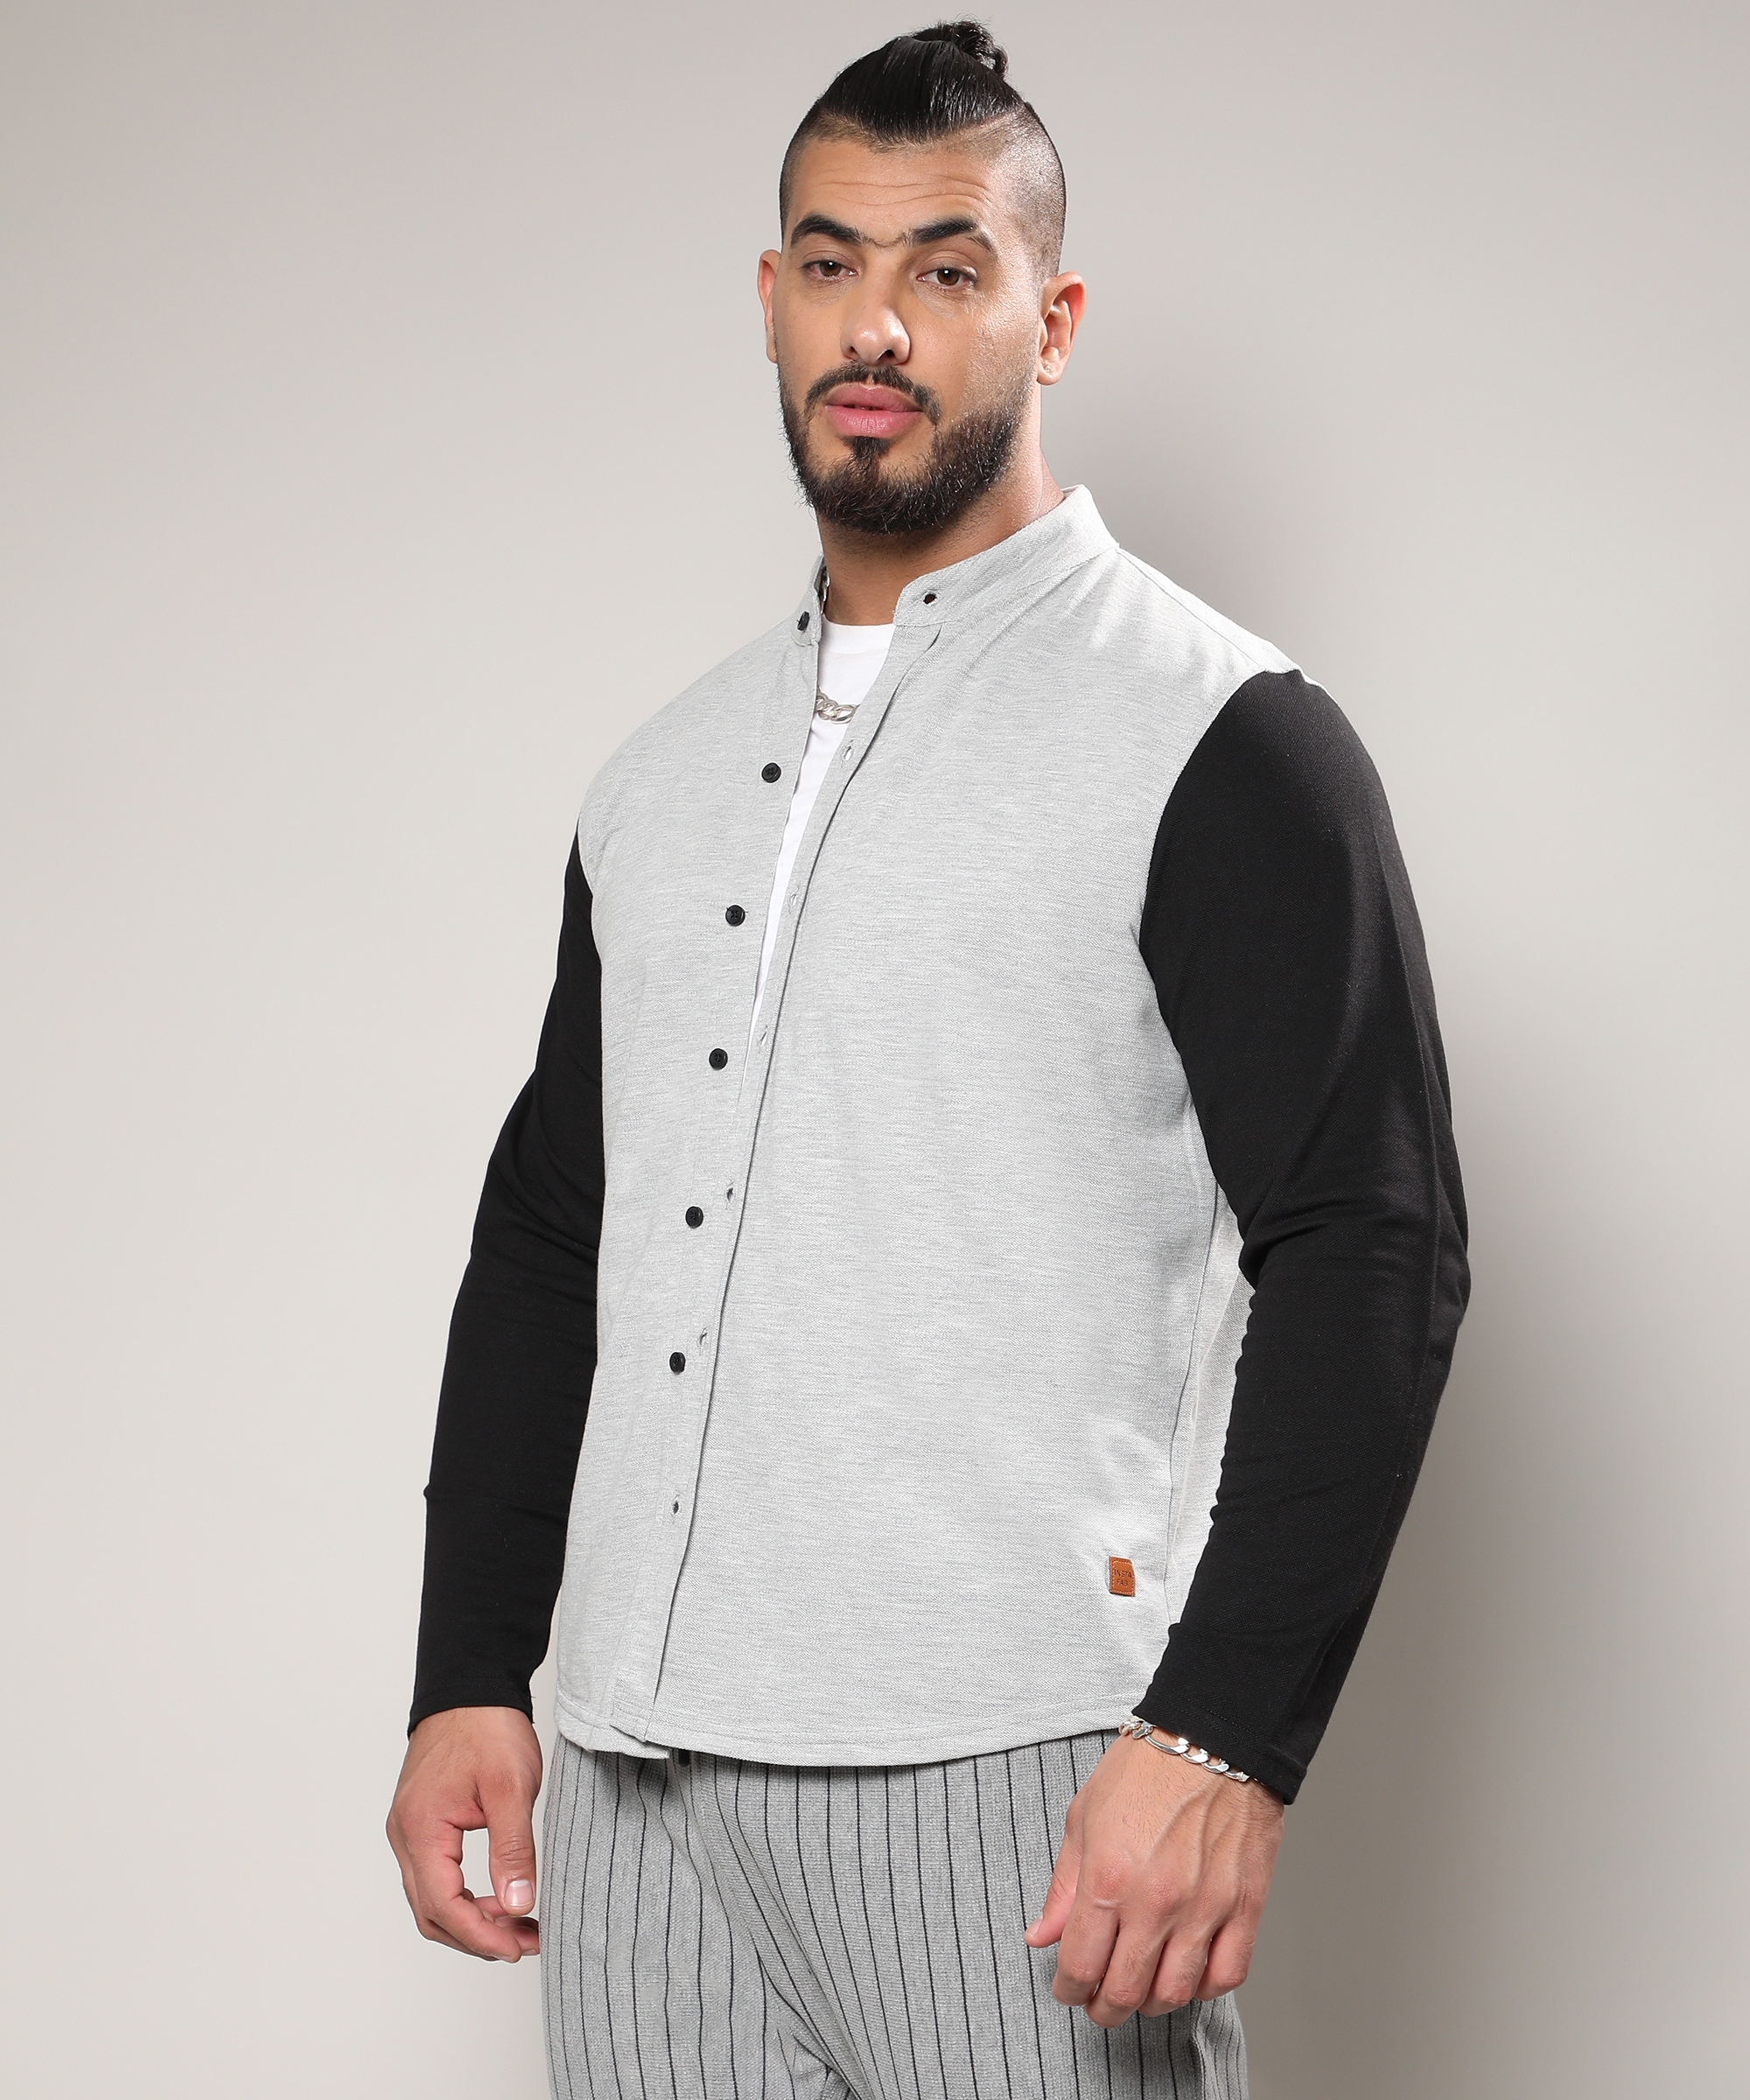 Instafab Plus | Men's White & Grey Contrast Sleeve Shirt